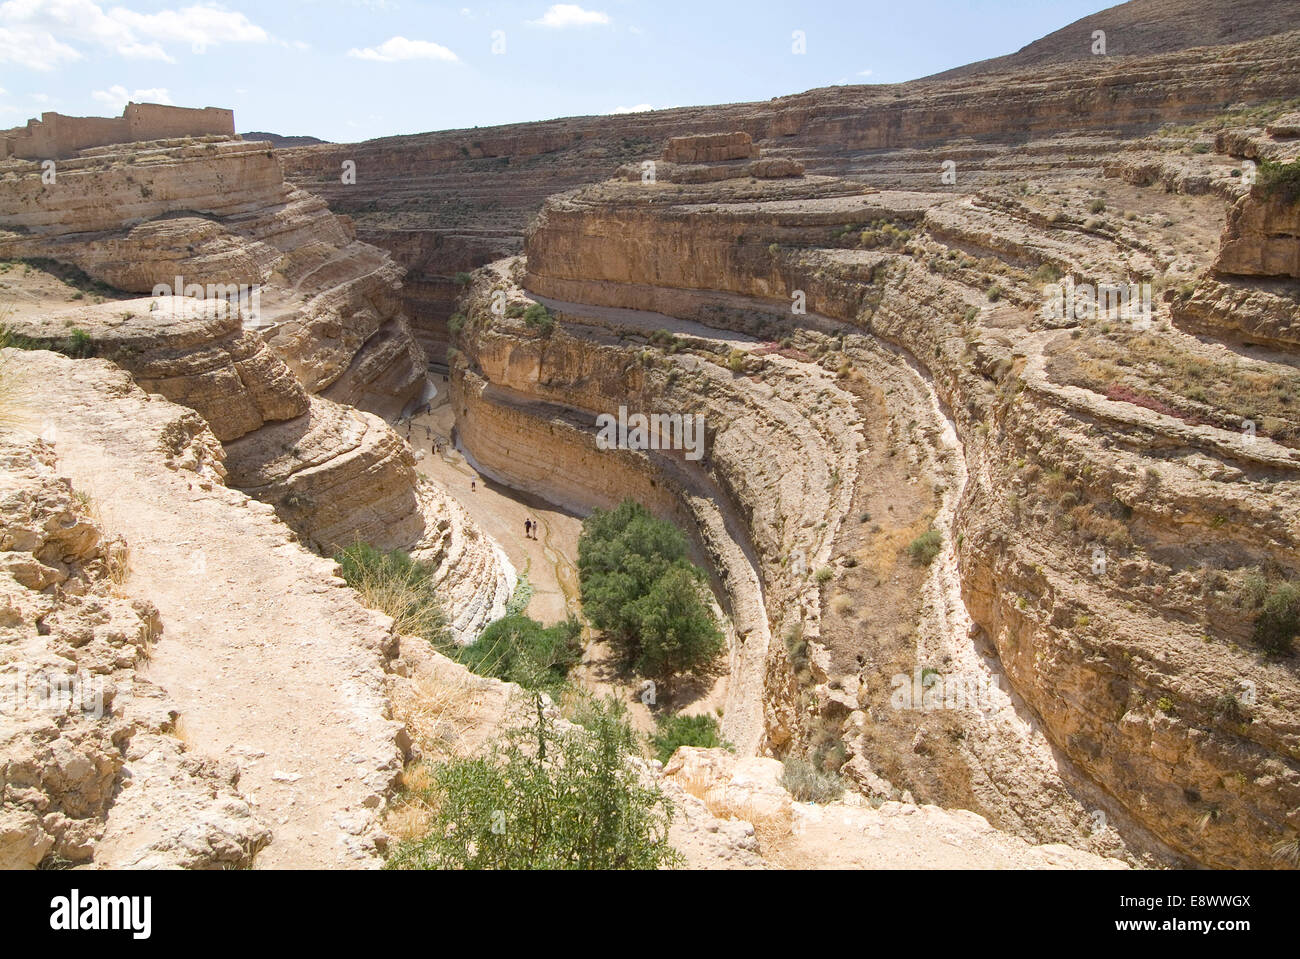 The canyon at Mides, Tunisia Stock Photo